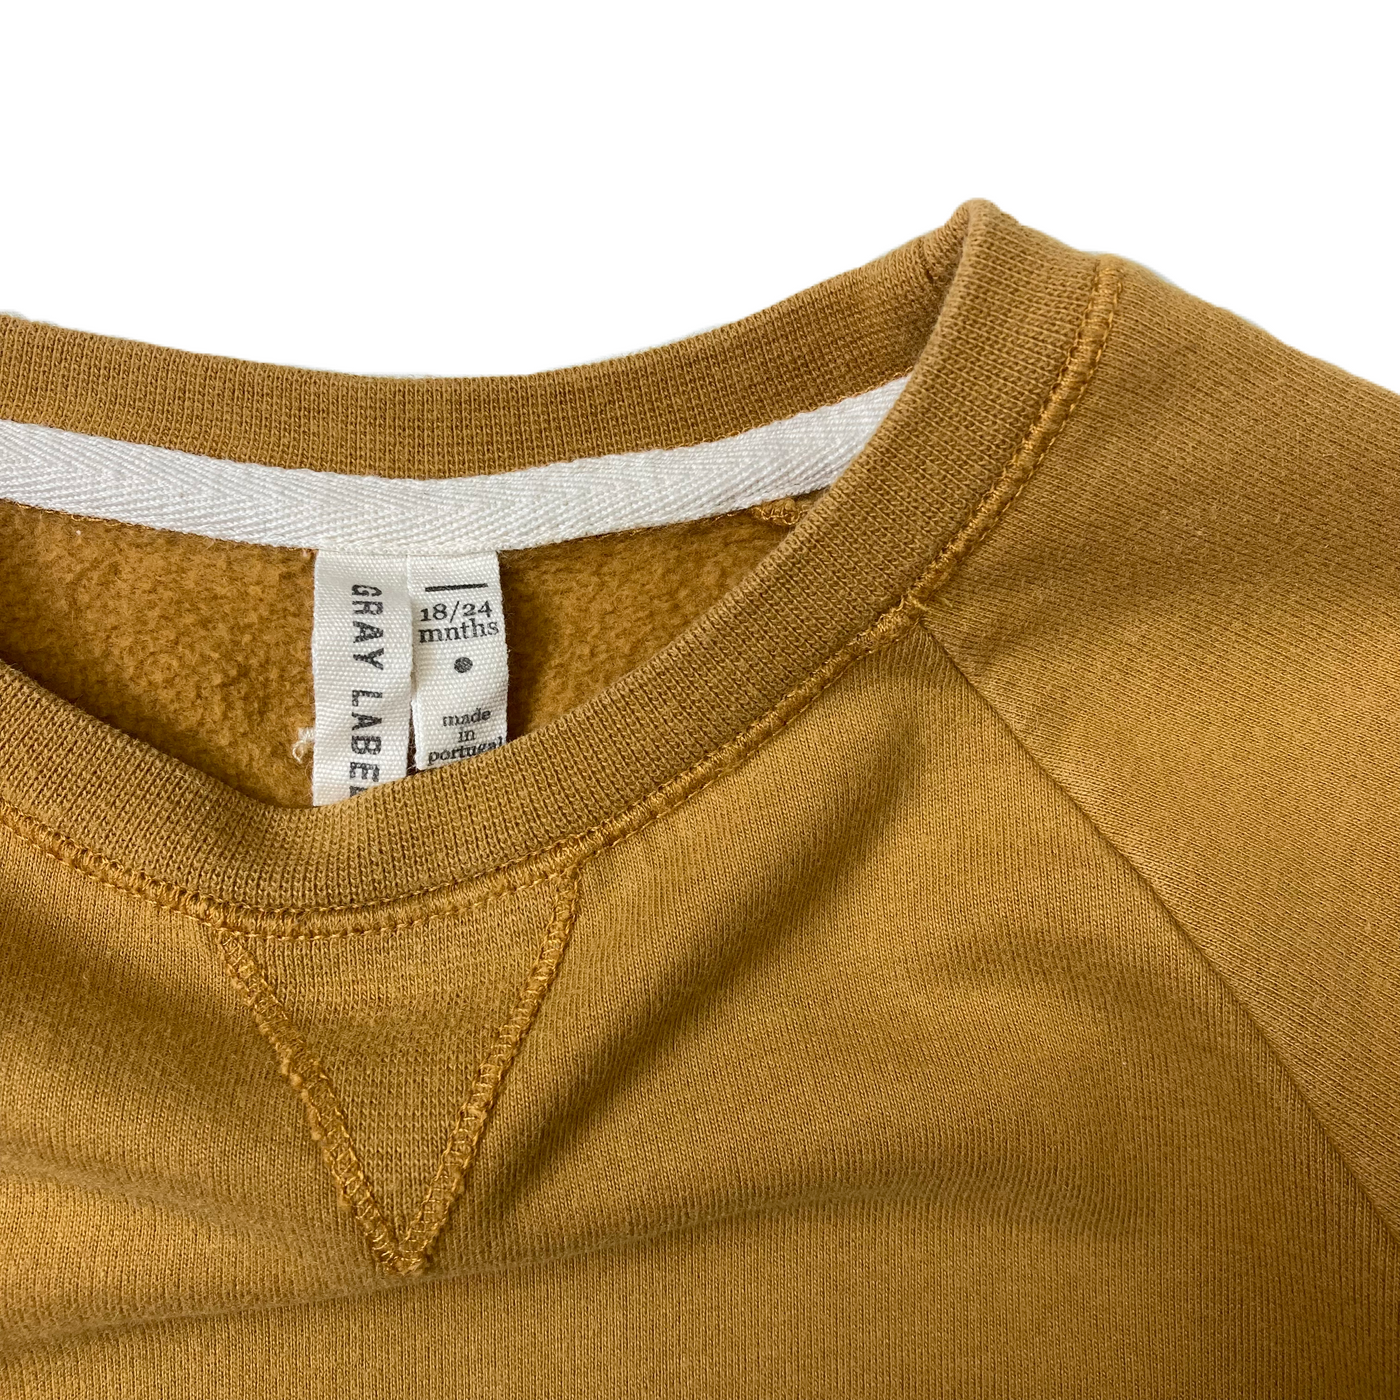 Gray Label sweatshirt 18/24m